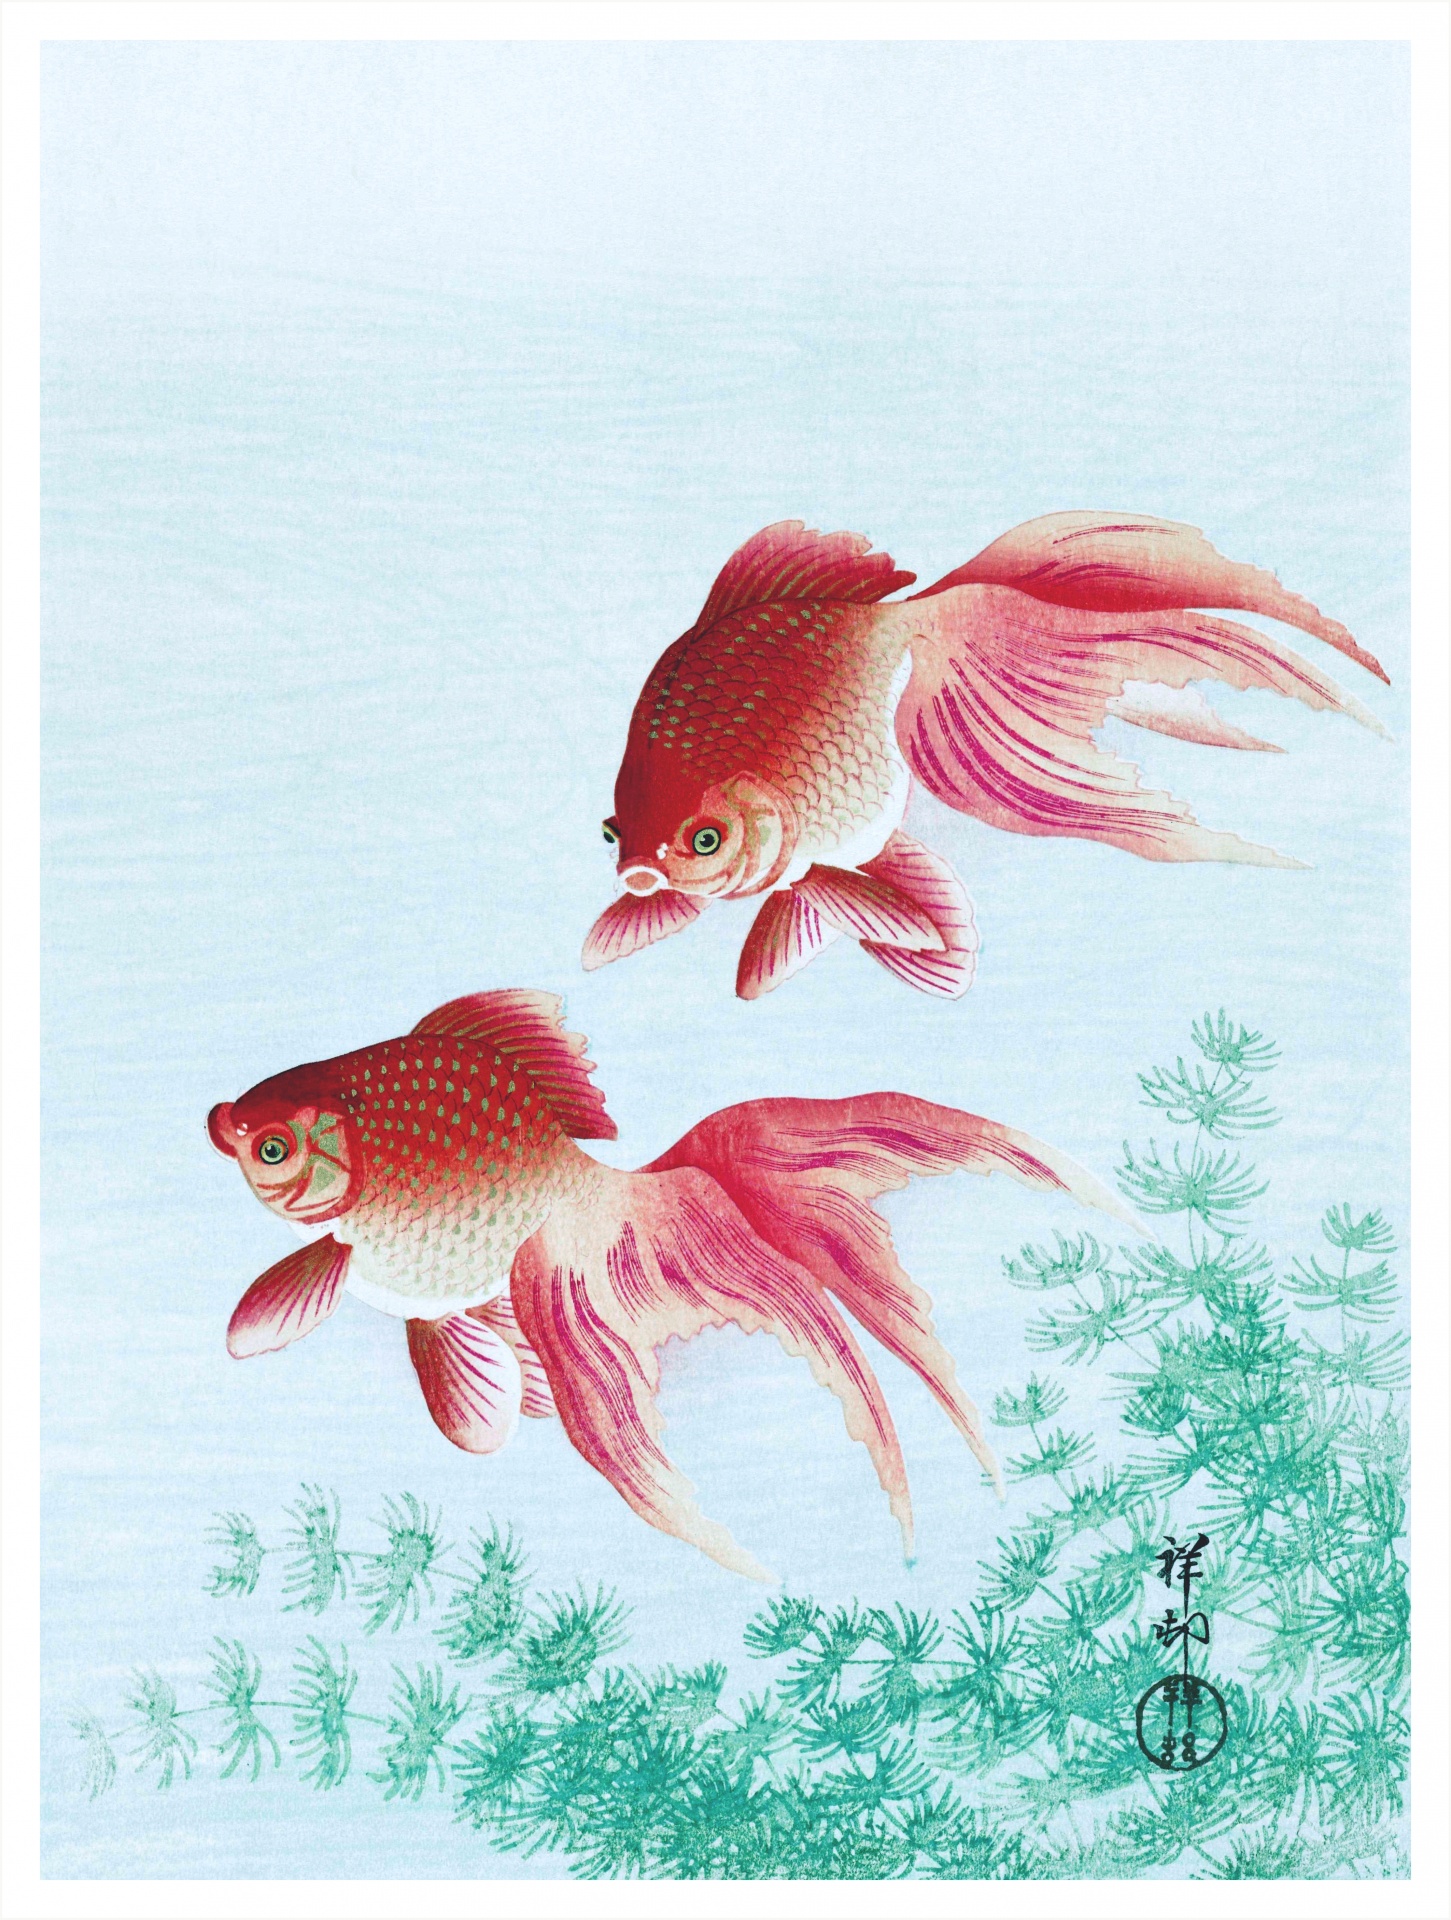 Japan koi carp vintage art old antique illustration painting poster placard